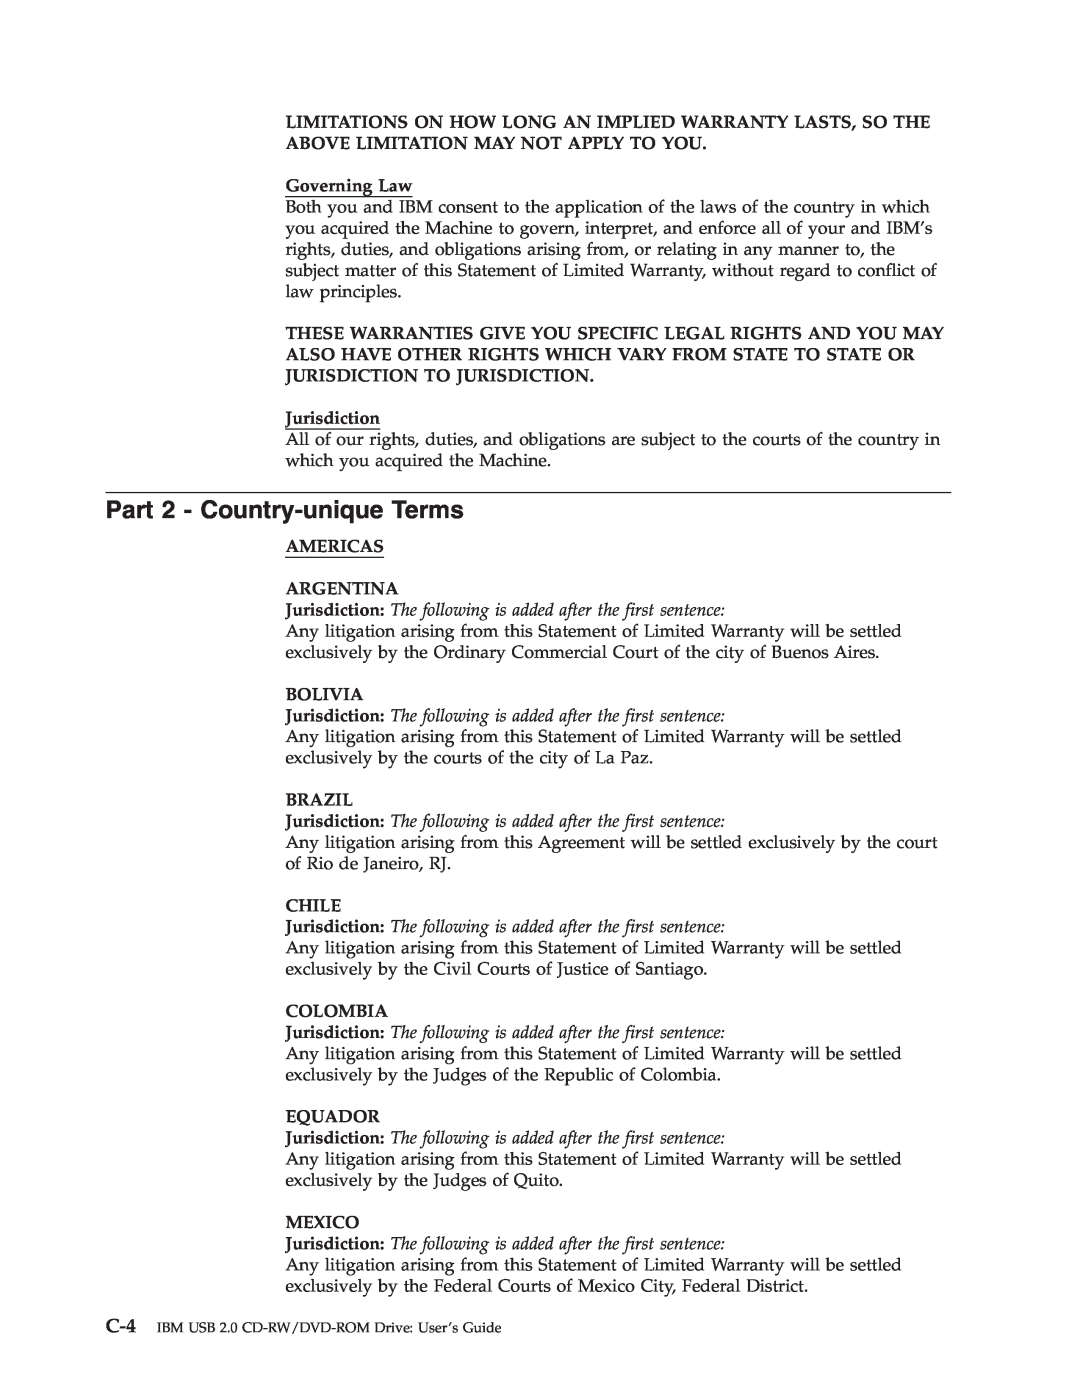 IBM 73P4518 Part 2 - Country-unique Terms, Governing Law, Jurisdiction, Americas Argentina, Bolivia, Brazil, Chile, Mexico 